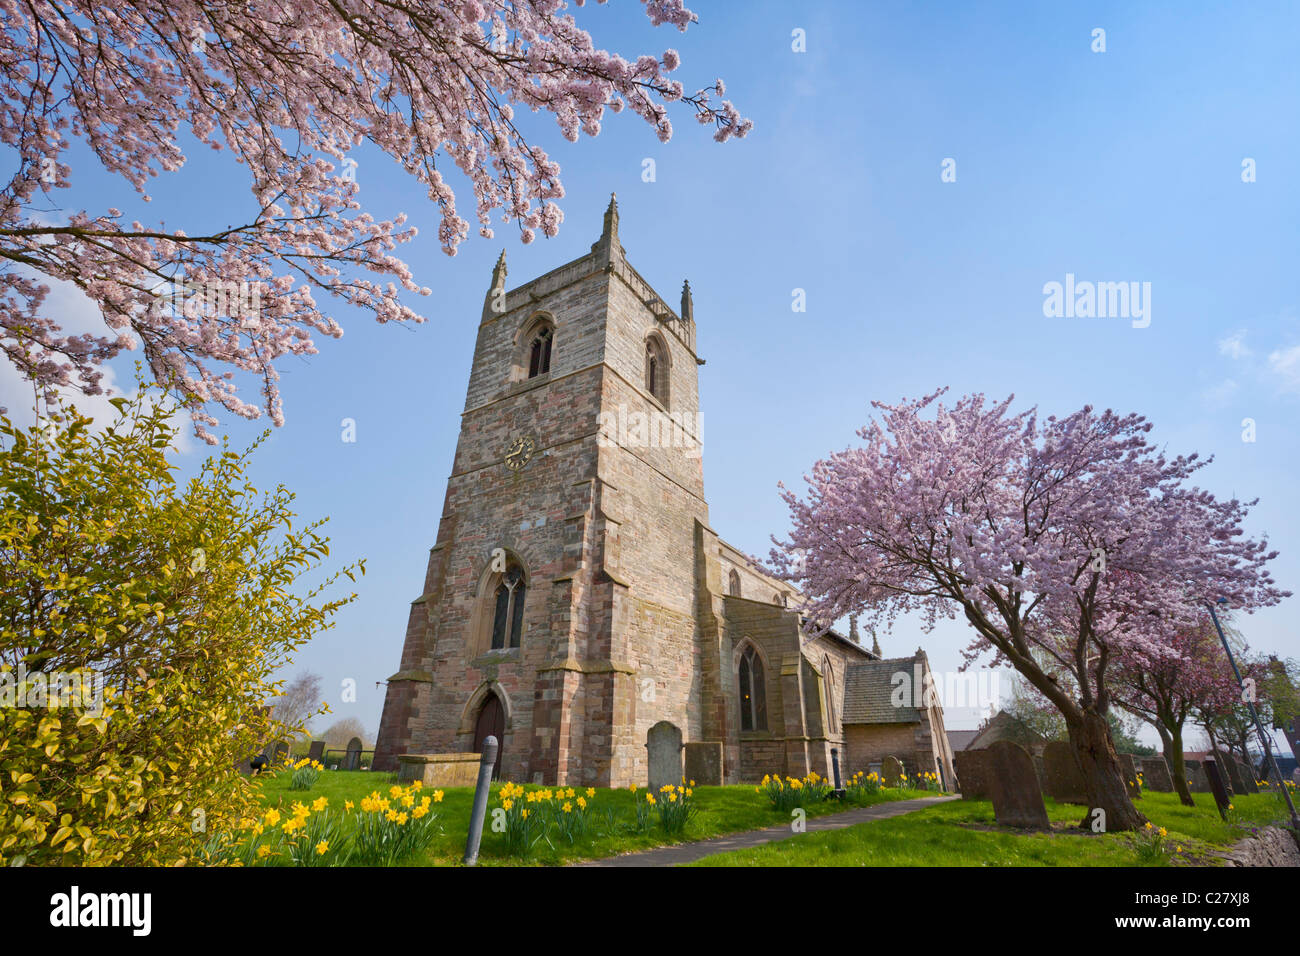 Parish Church of St. Bartholomew in the village of Kneesall Nottinghamshire England GB UK EU Europe Stock Photo